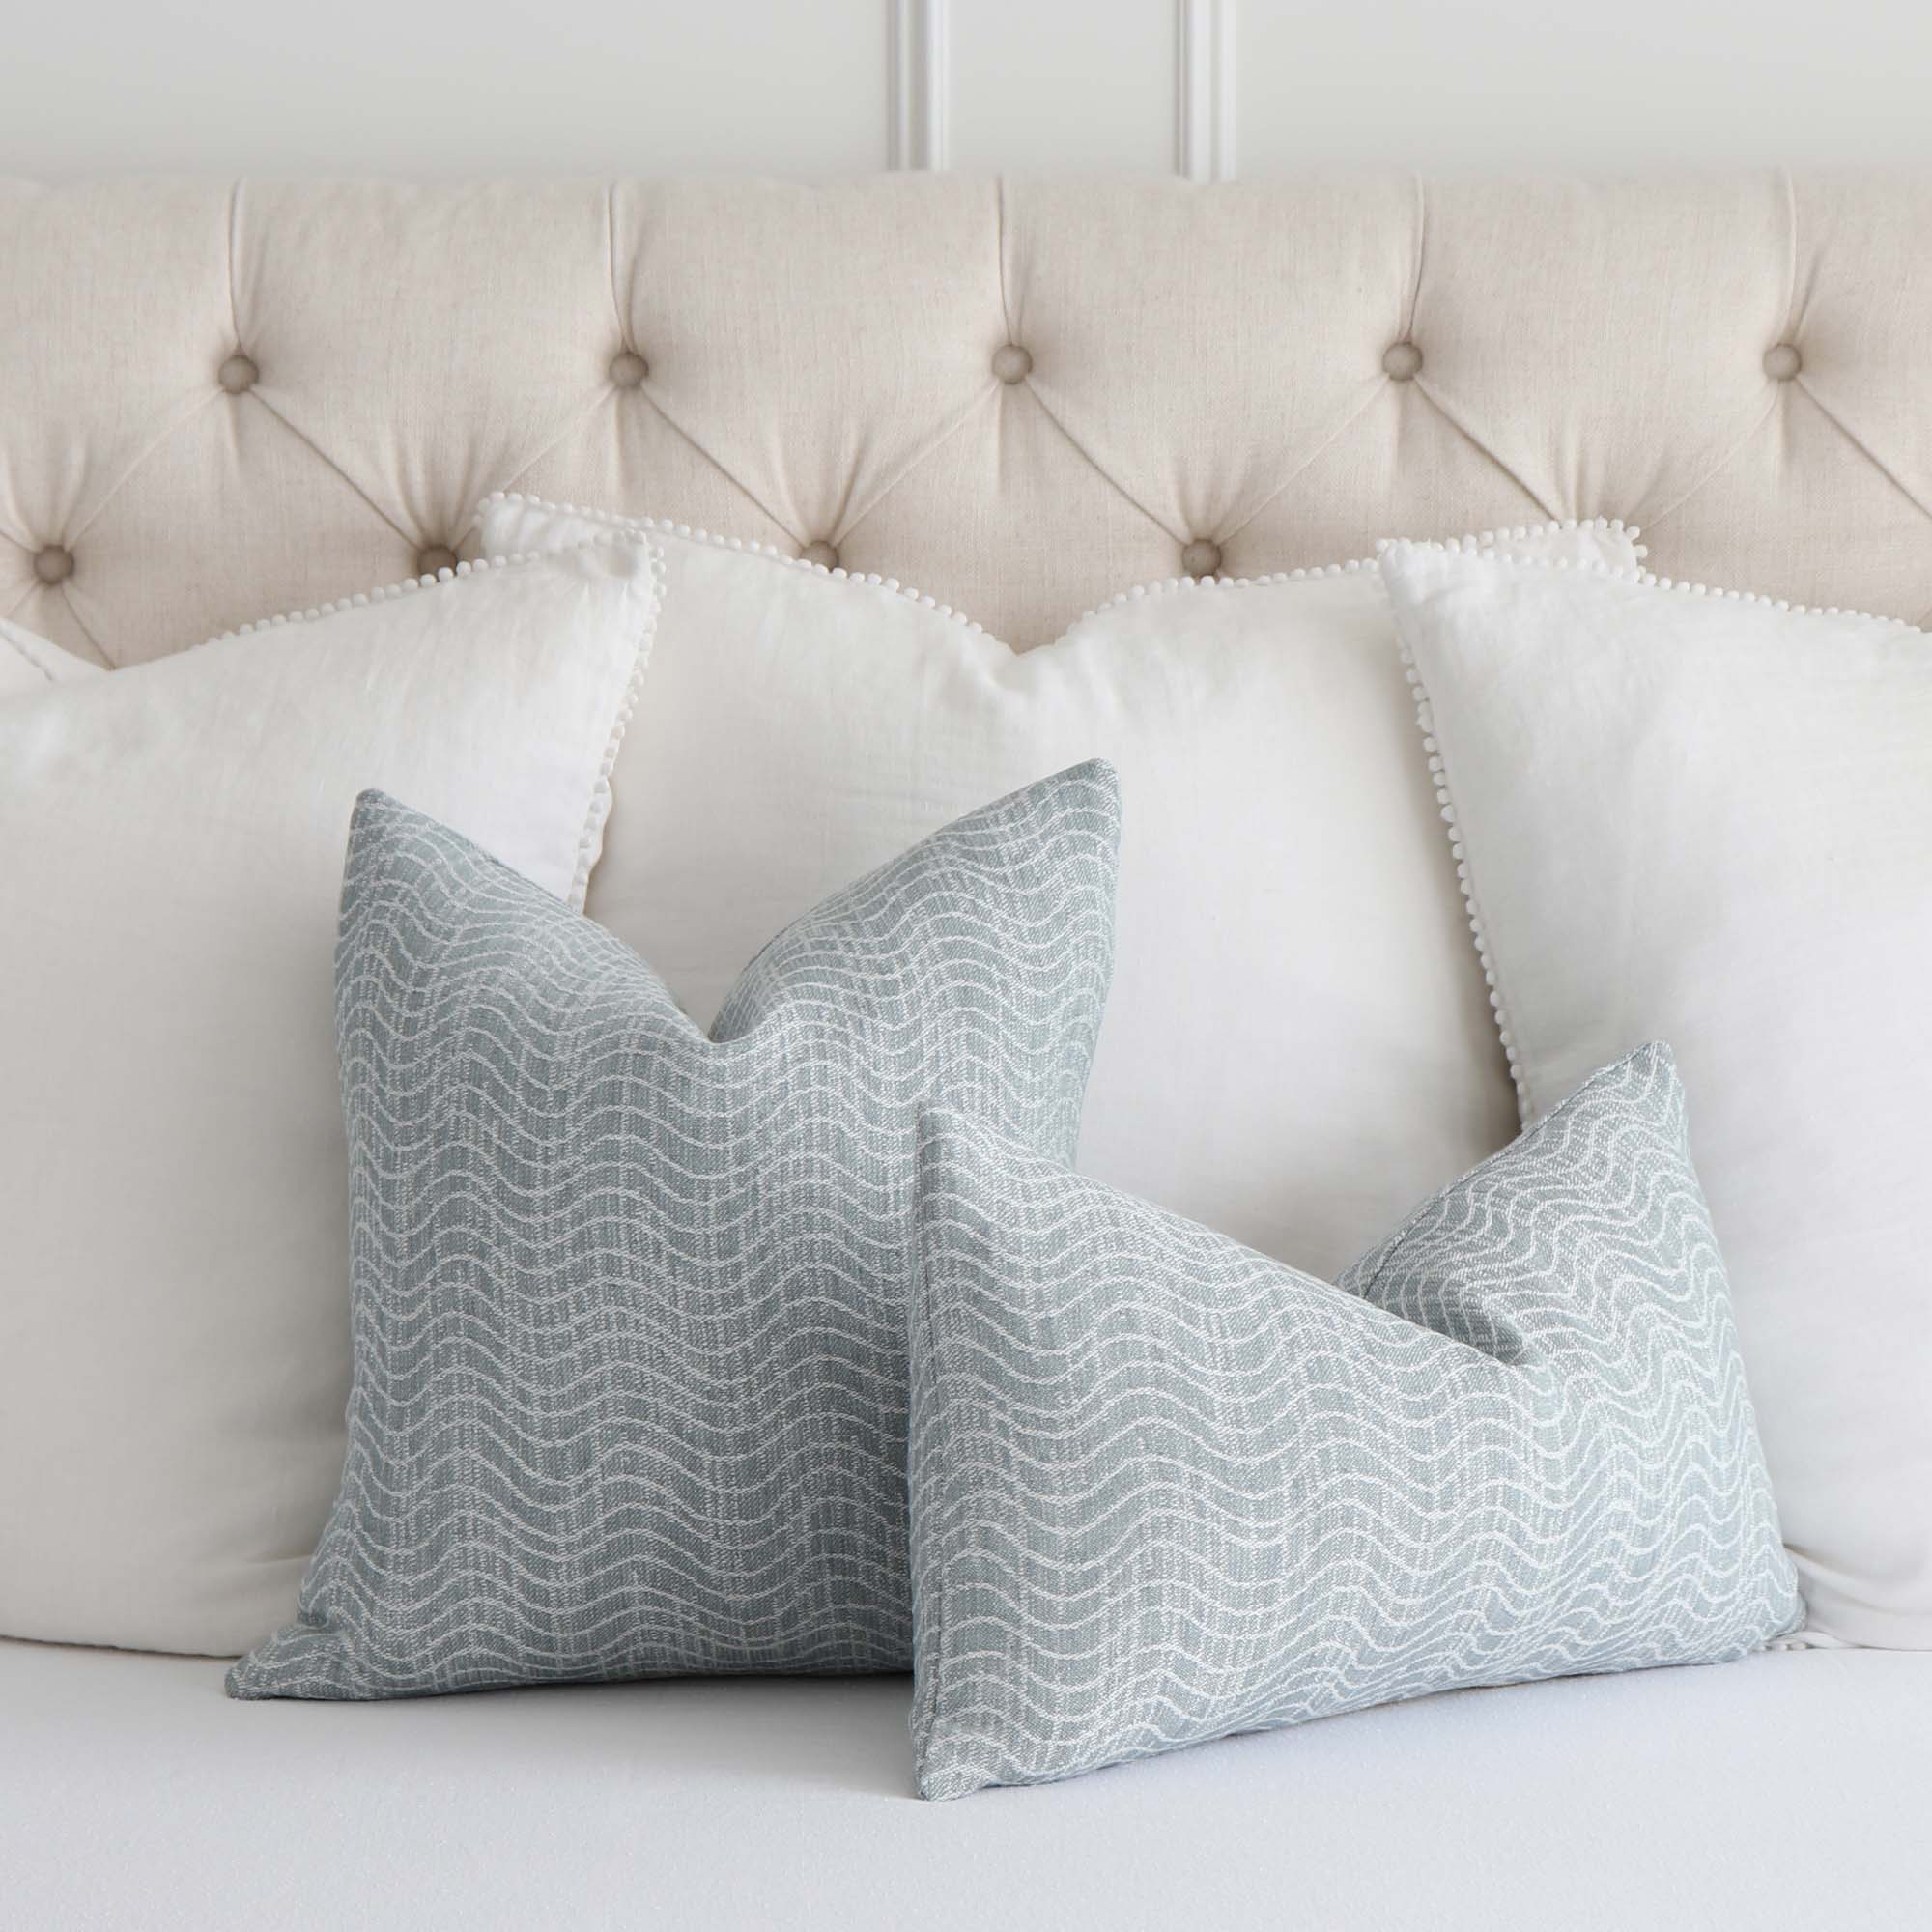 Kelly Wearstler Lee Jofa Dadami Pool Blue Woven Linen Striped Designer Throw Pillow Cover on Bed